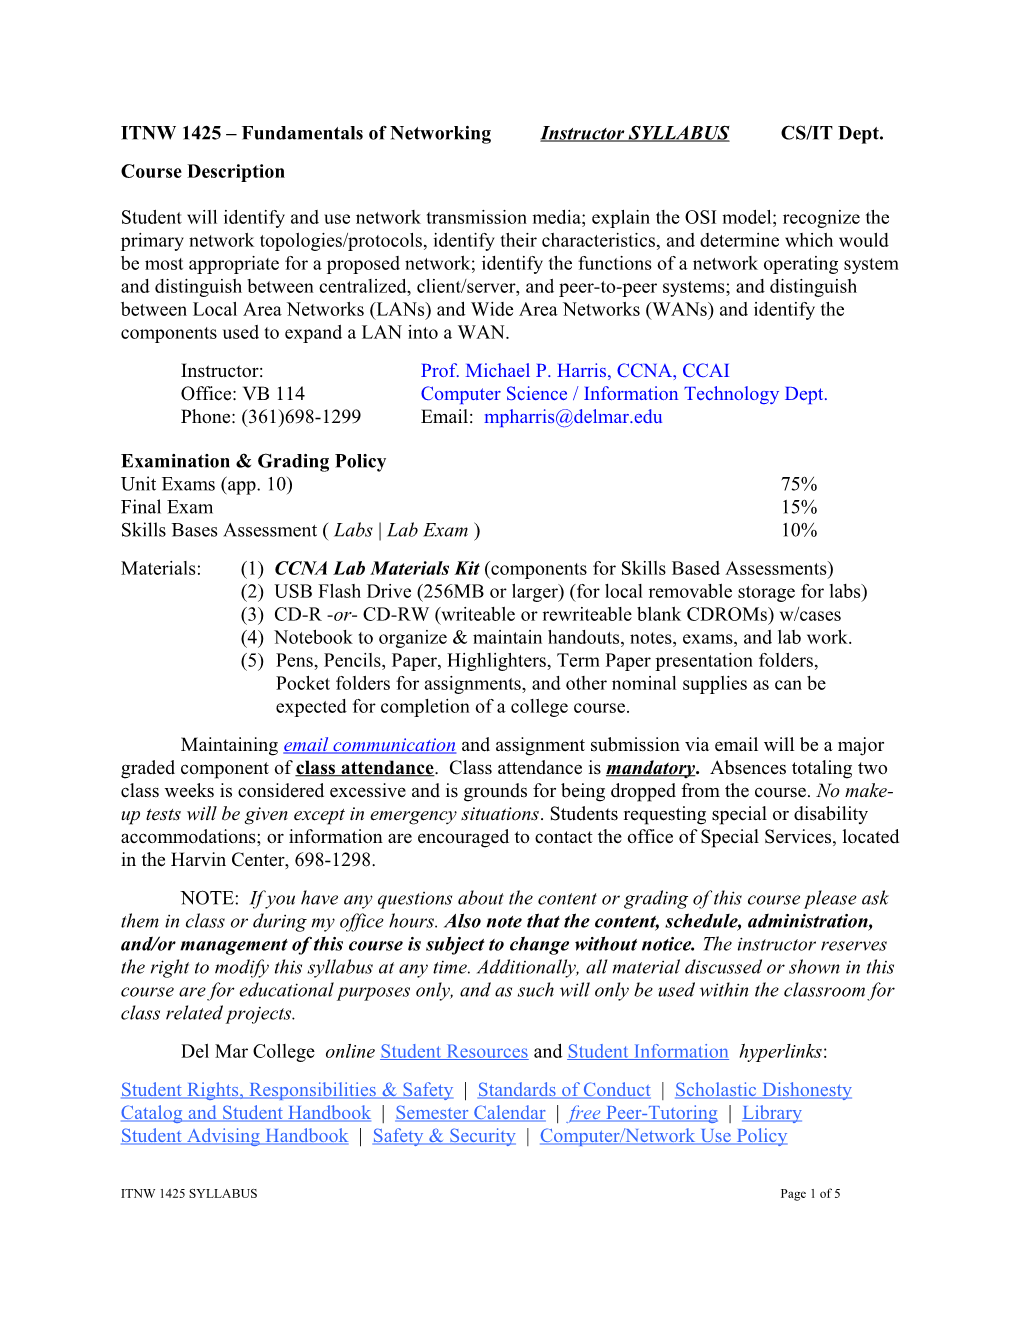 ITNW 1425 Fundamentals of Networkinginstructor SYLLABUSCS/IT Dept